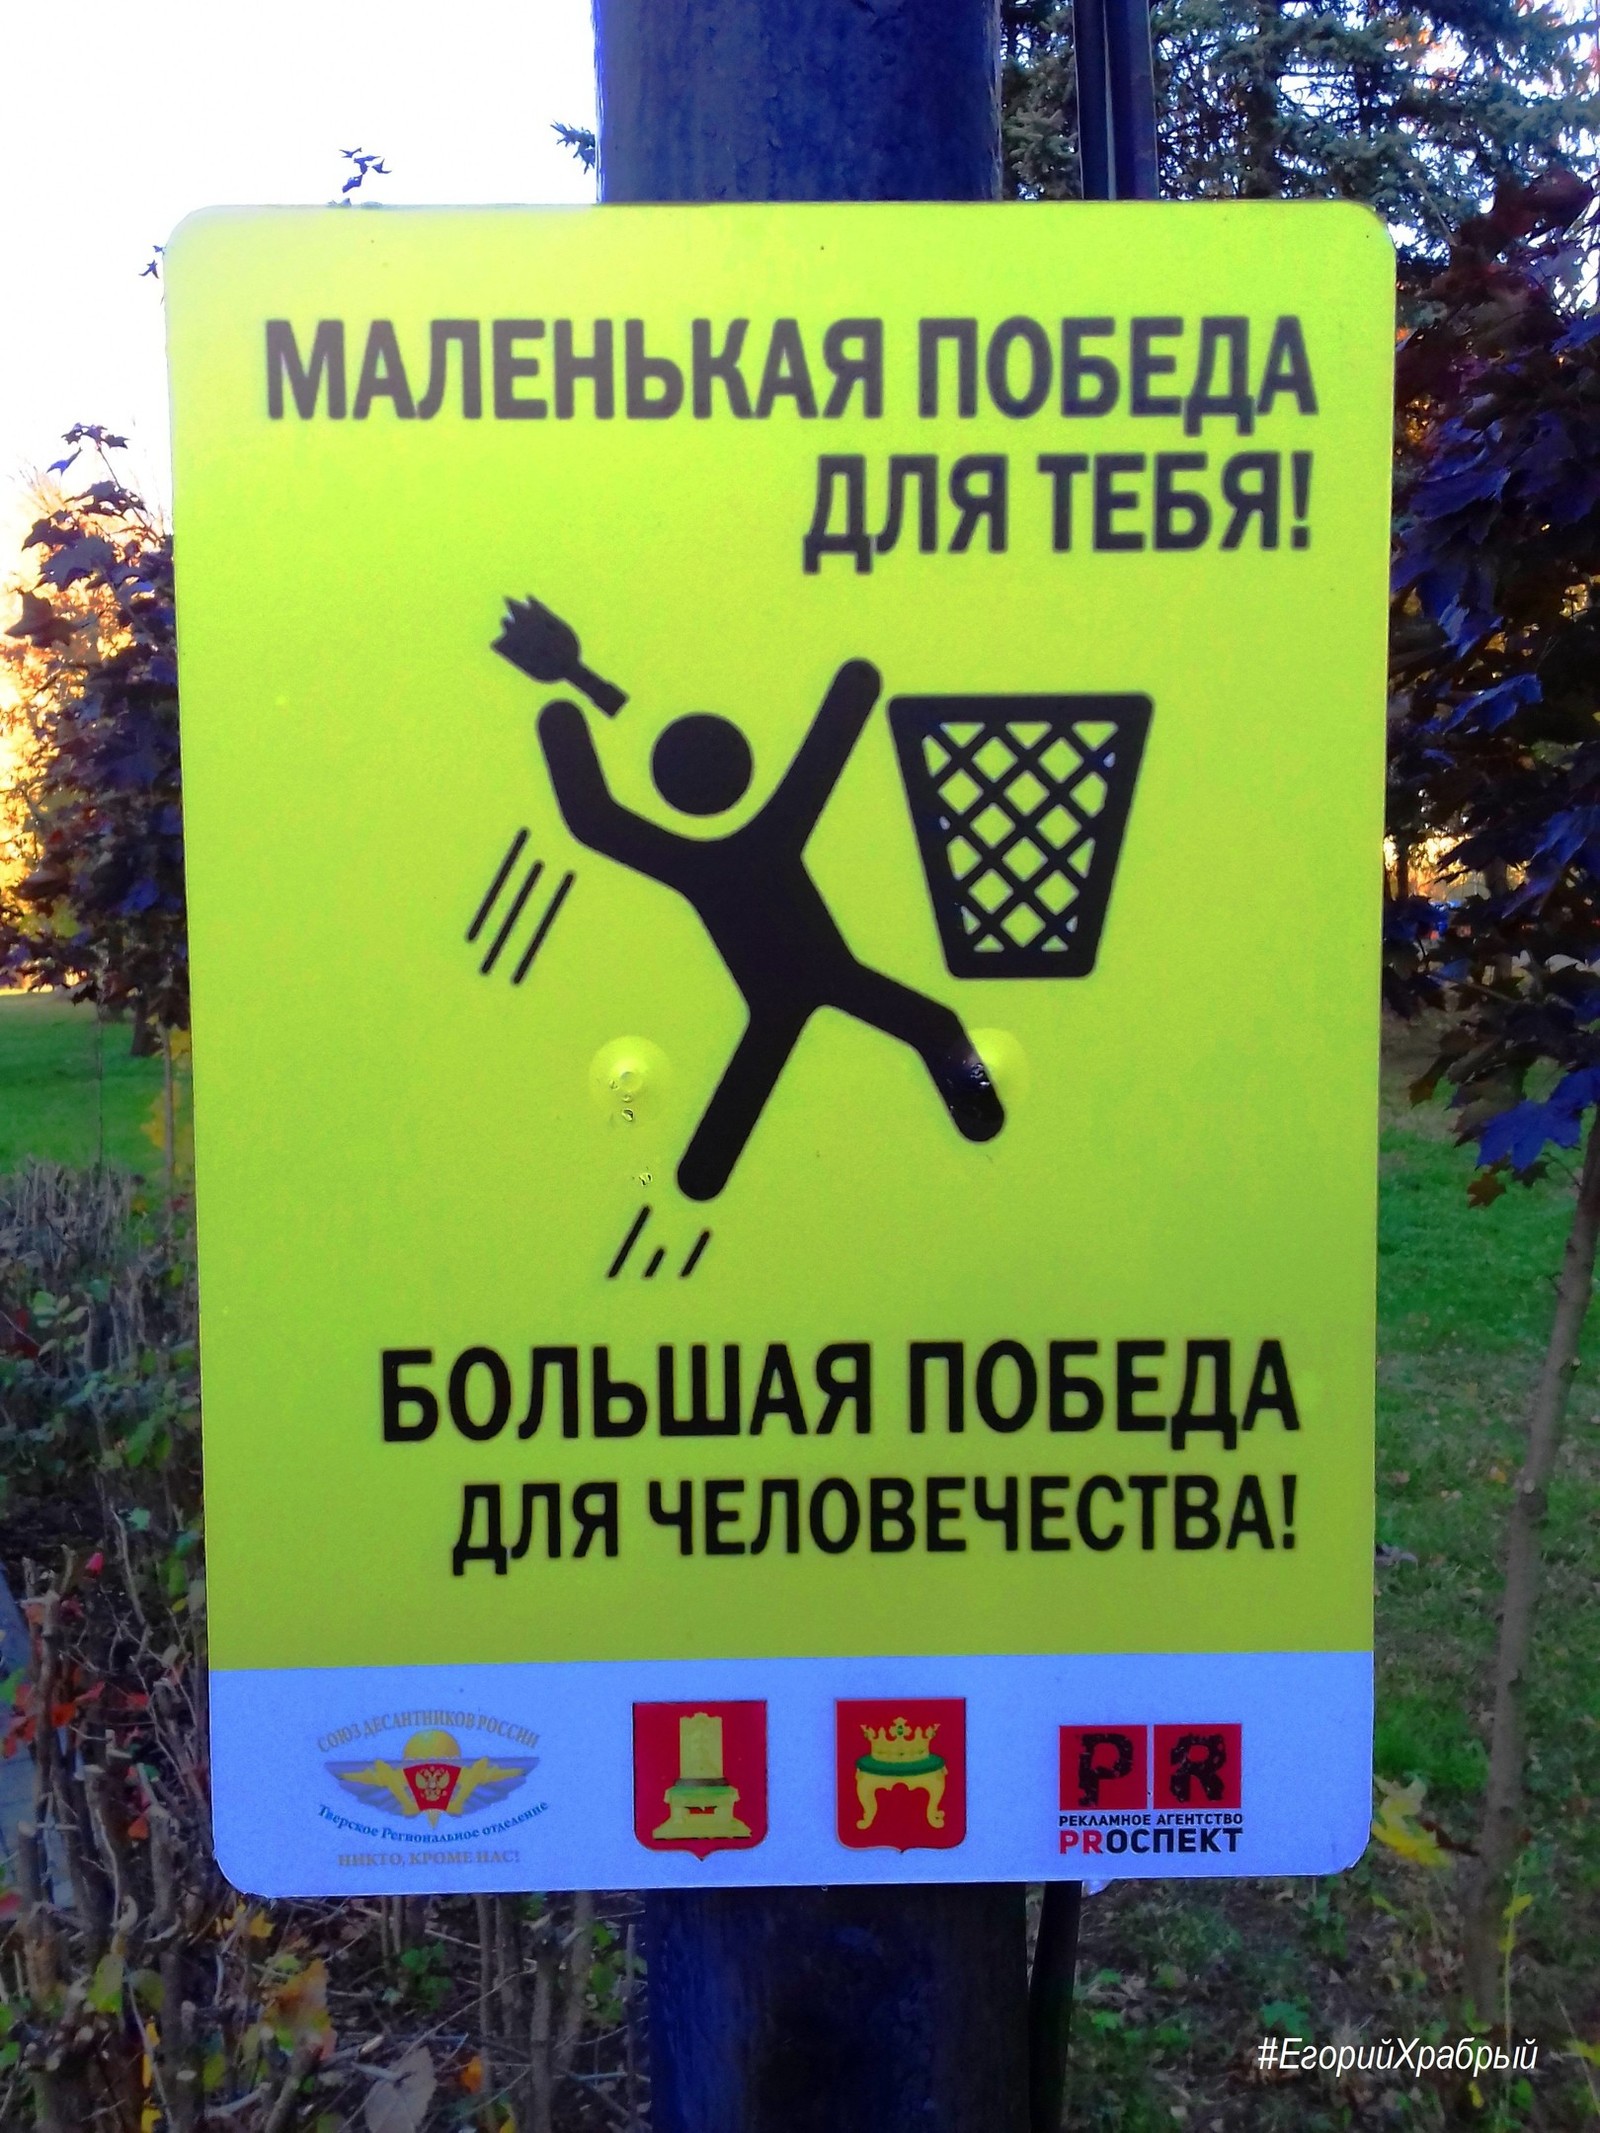 Social advertising - Tver - Social advertisement, Garbage, The park, Tver, Longpost